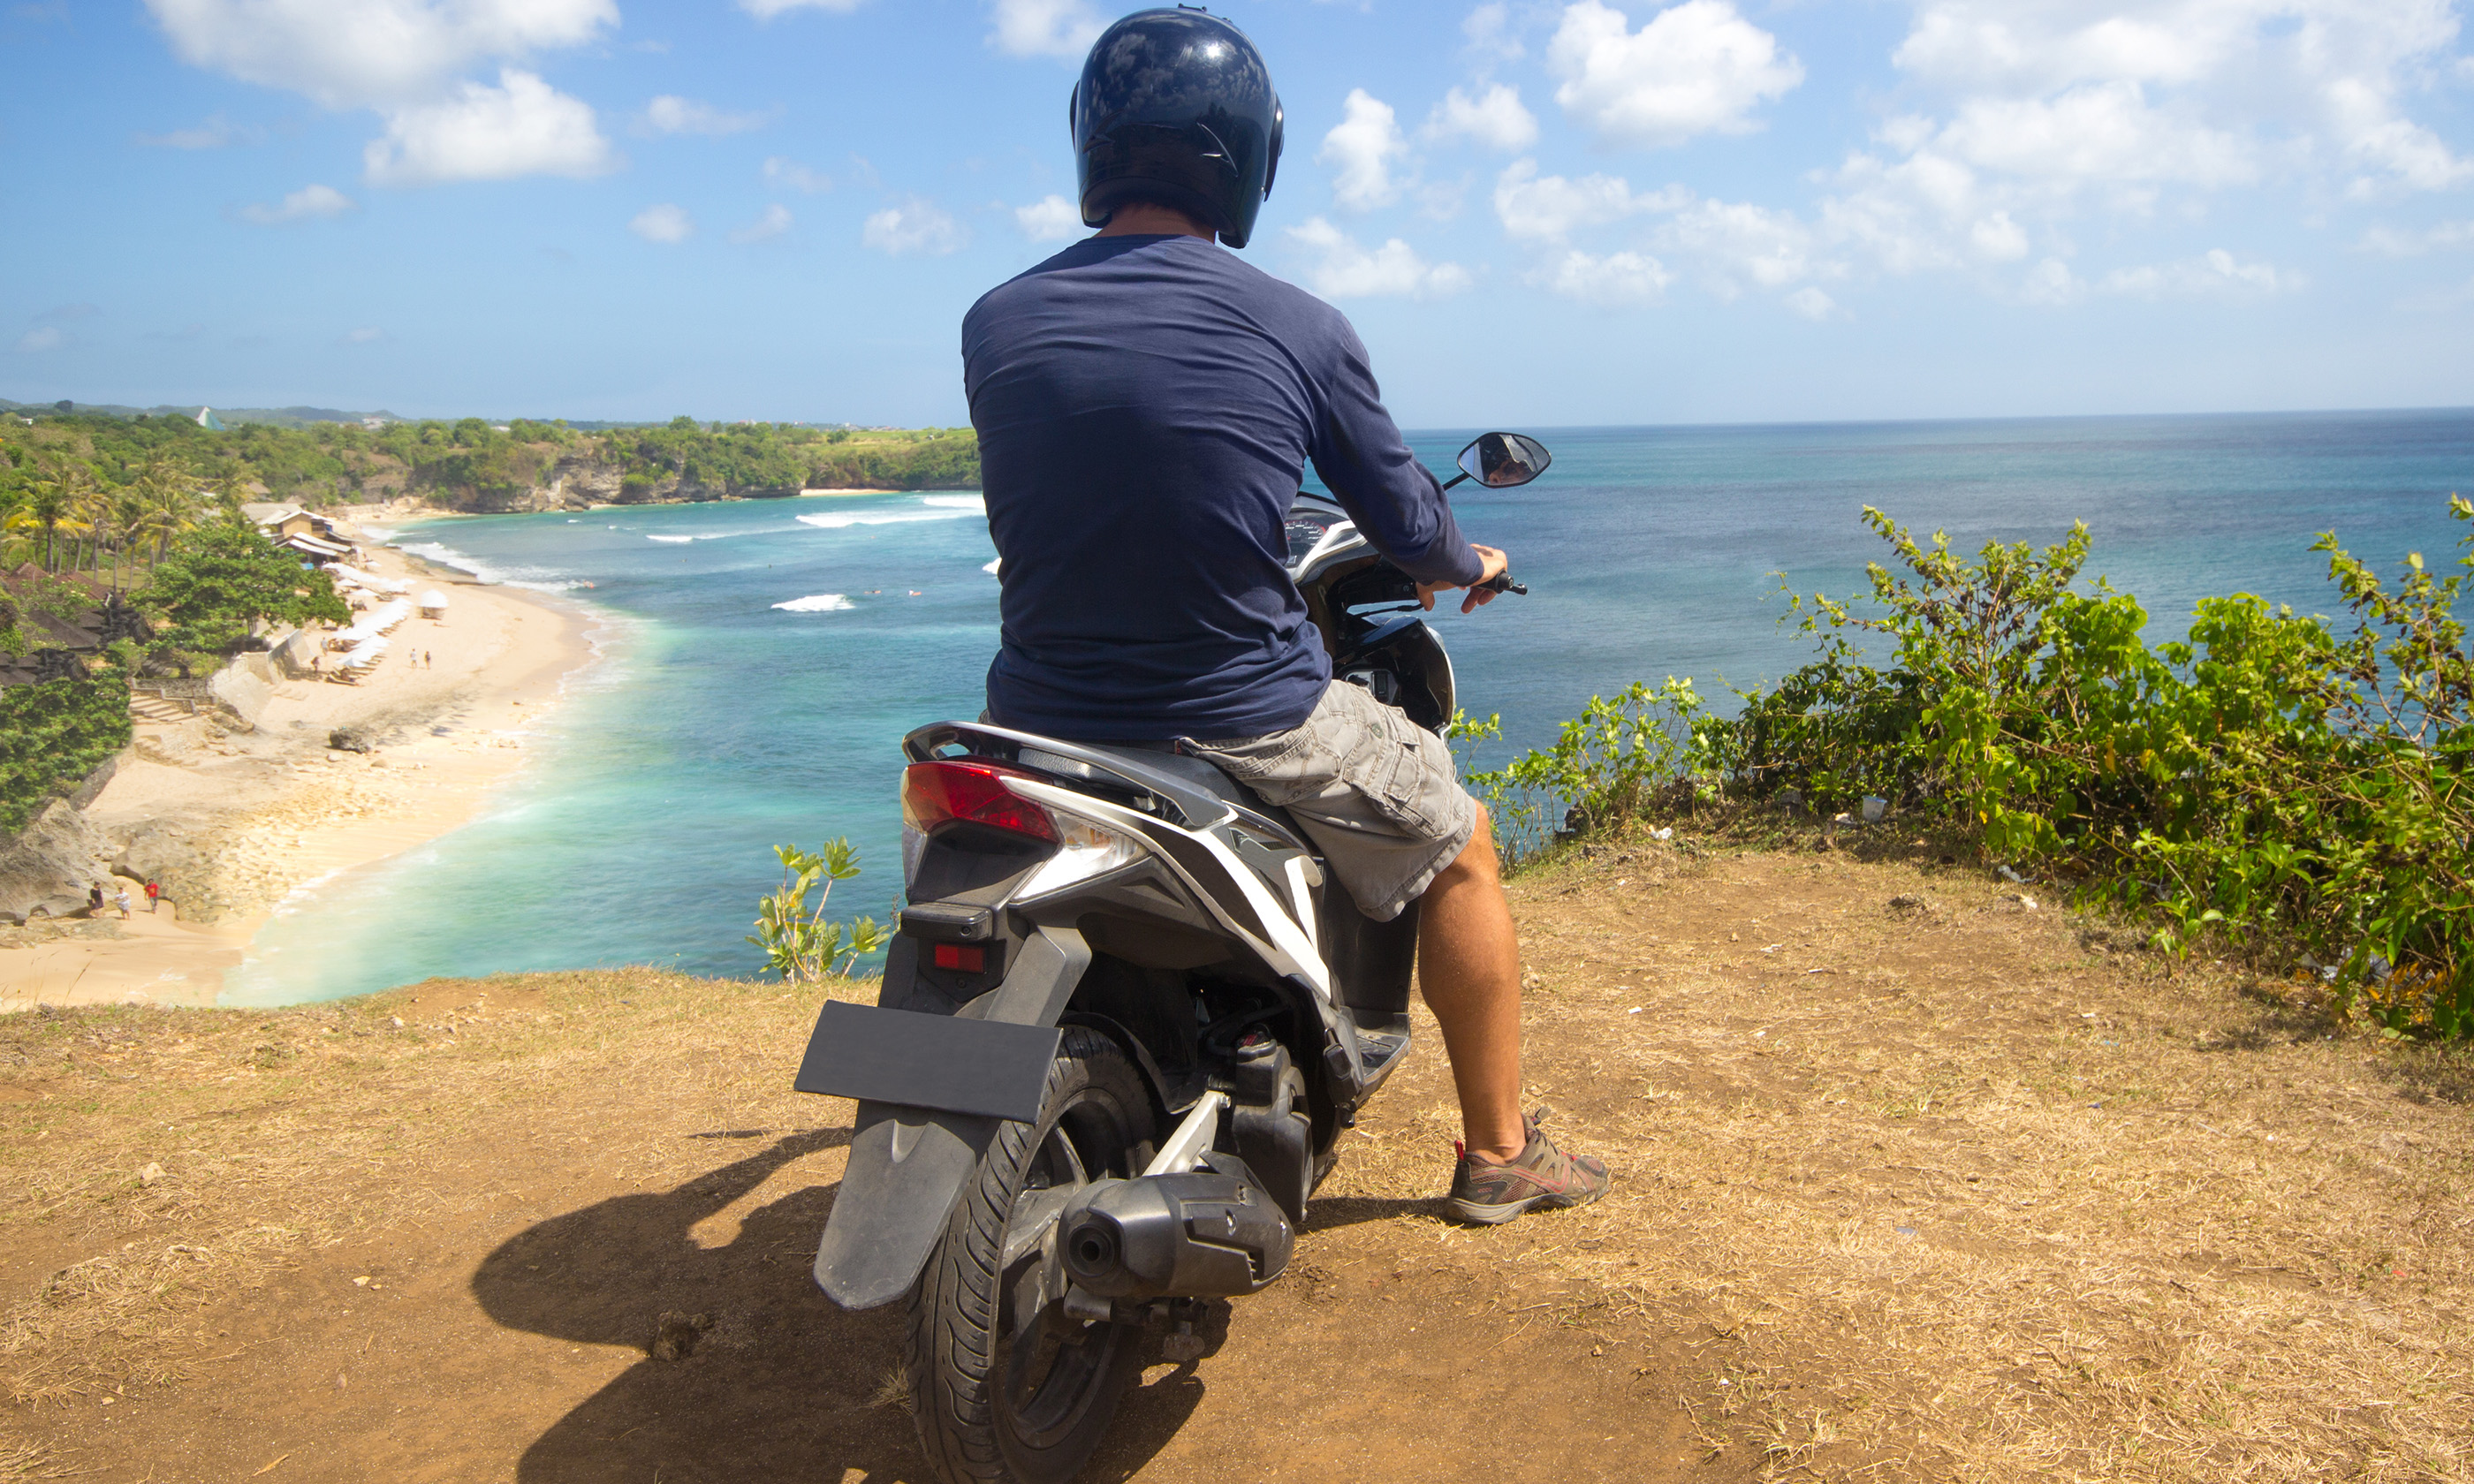 On a moped, overlooking a beach (Shutterstock: see main credit below)